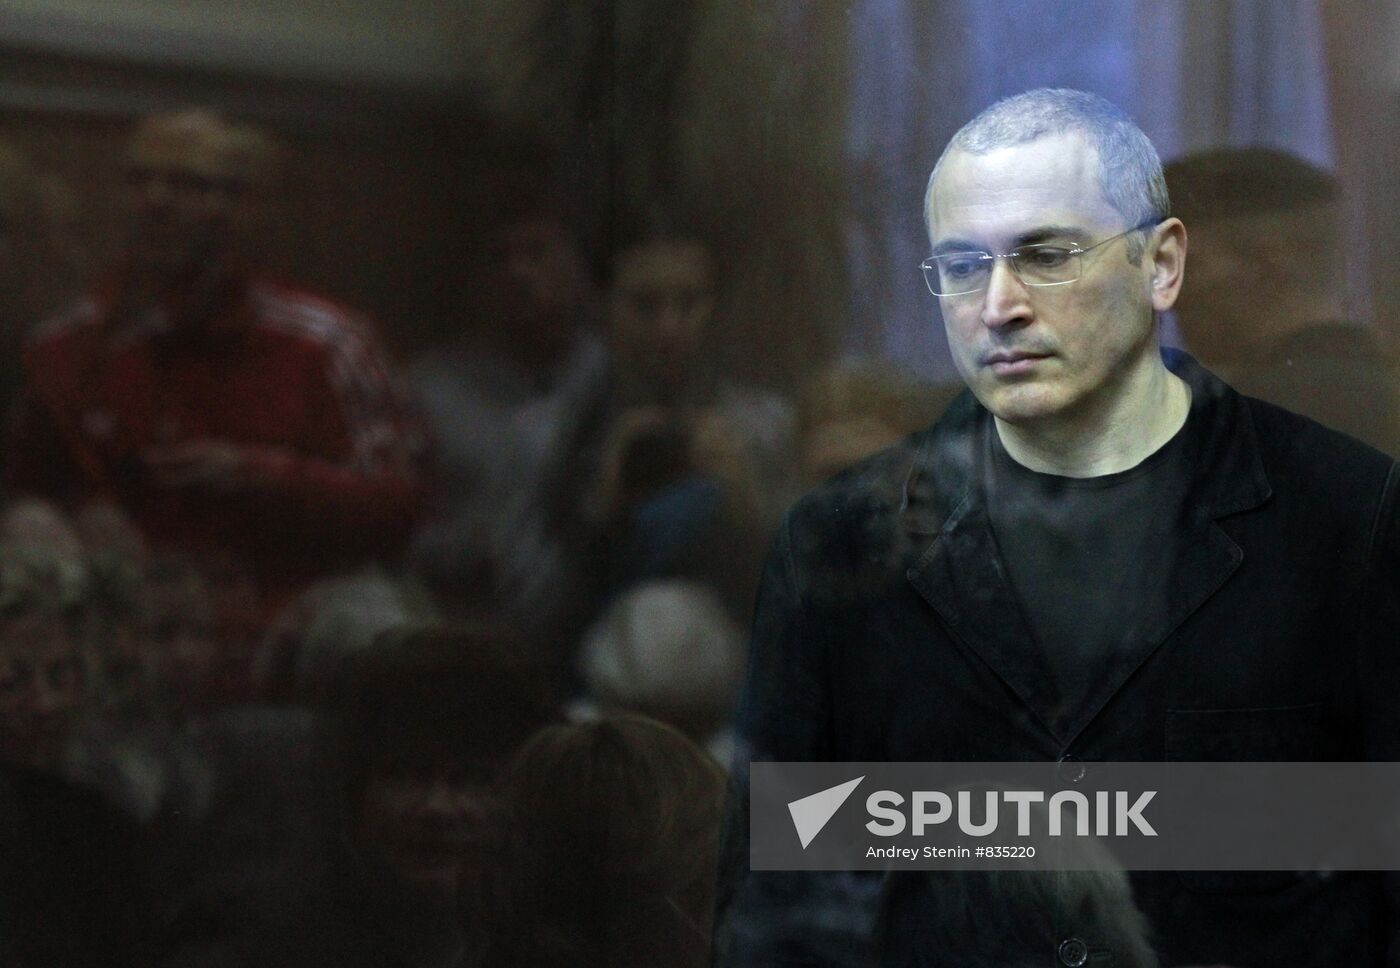 Announcement of verdict in Khodorkovsky and Lebedev trial